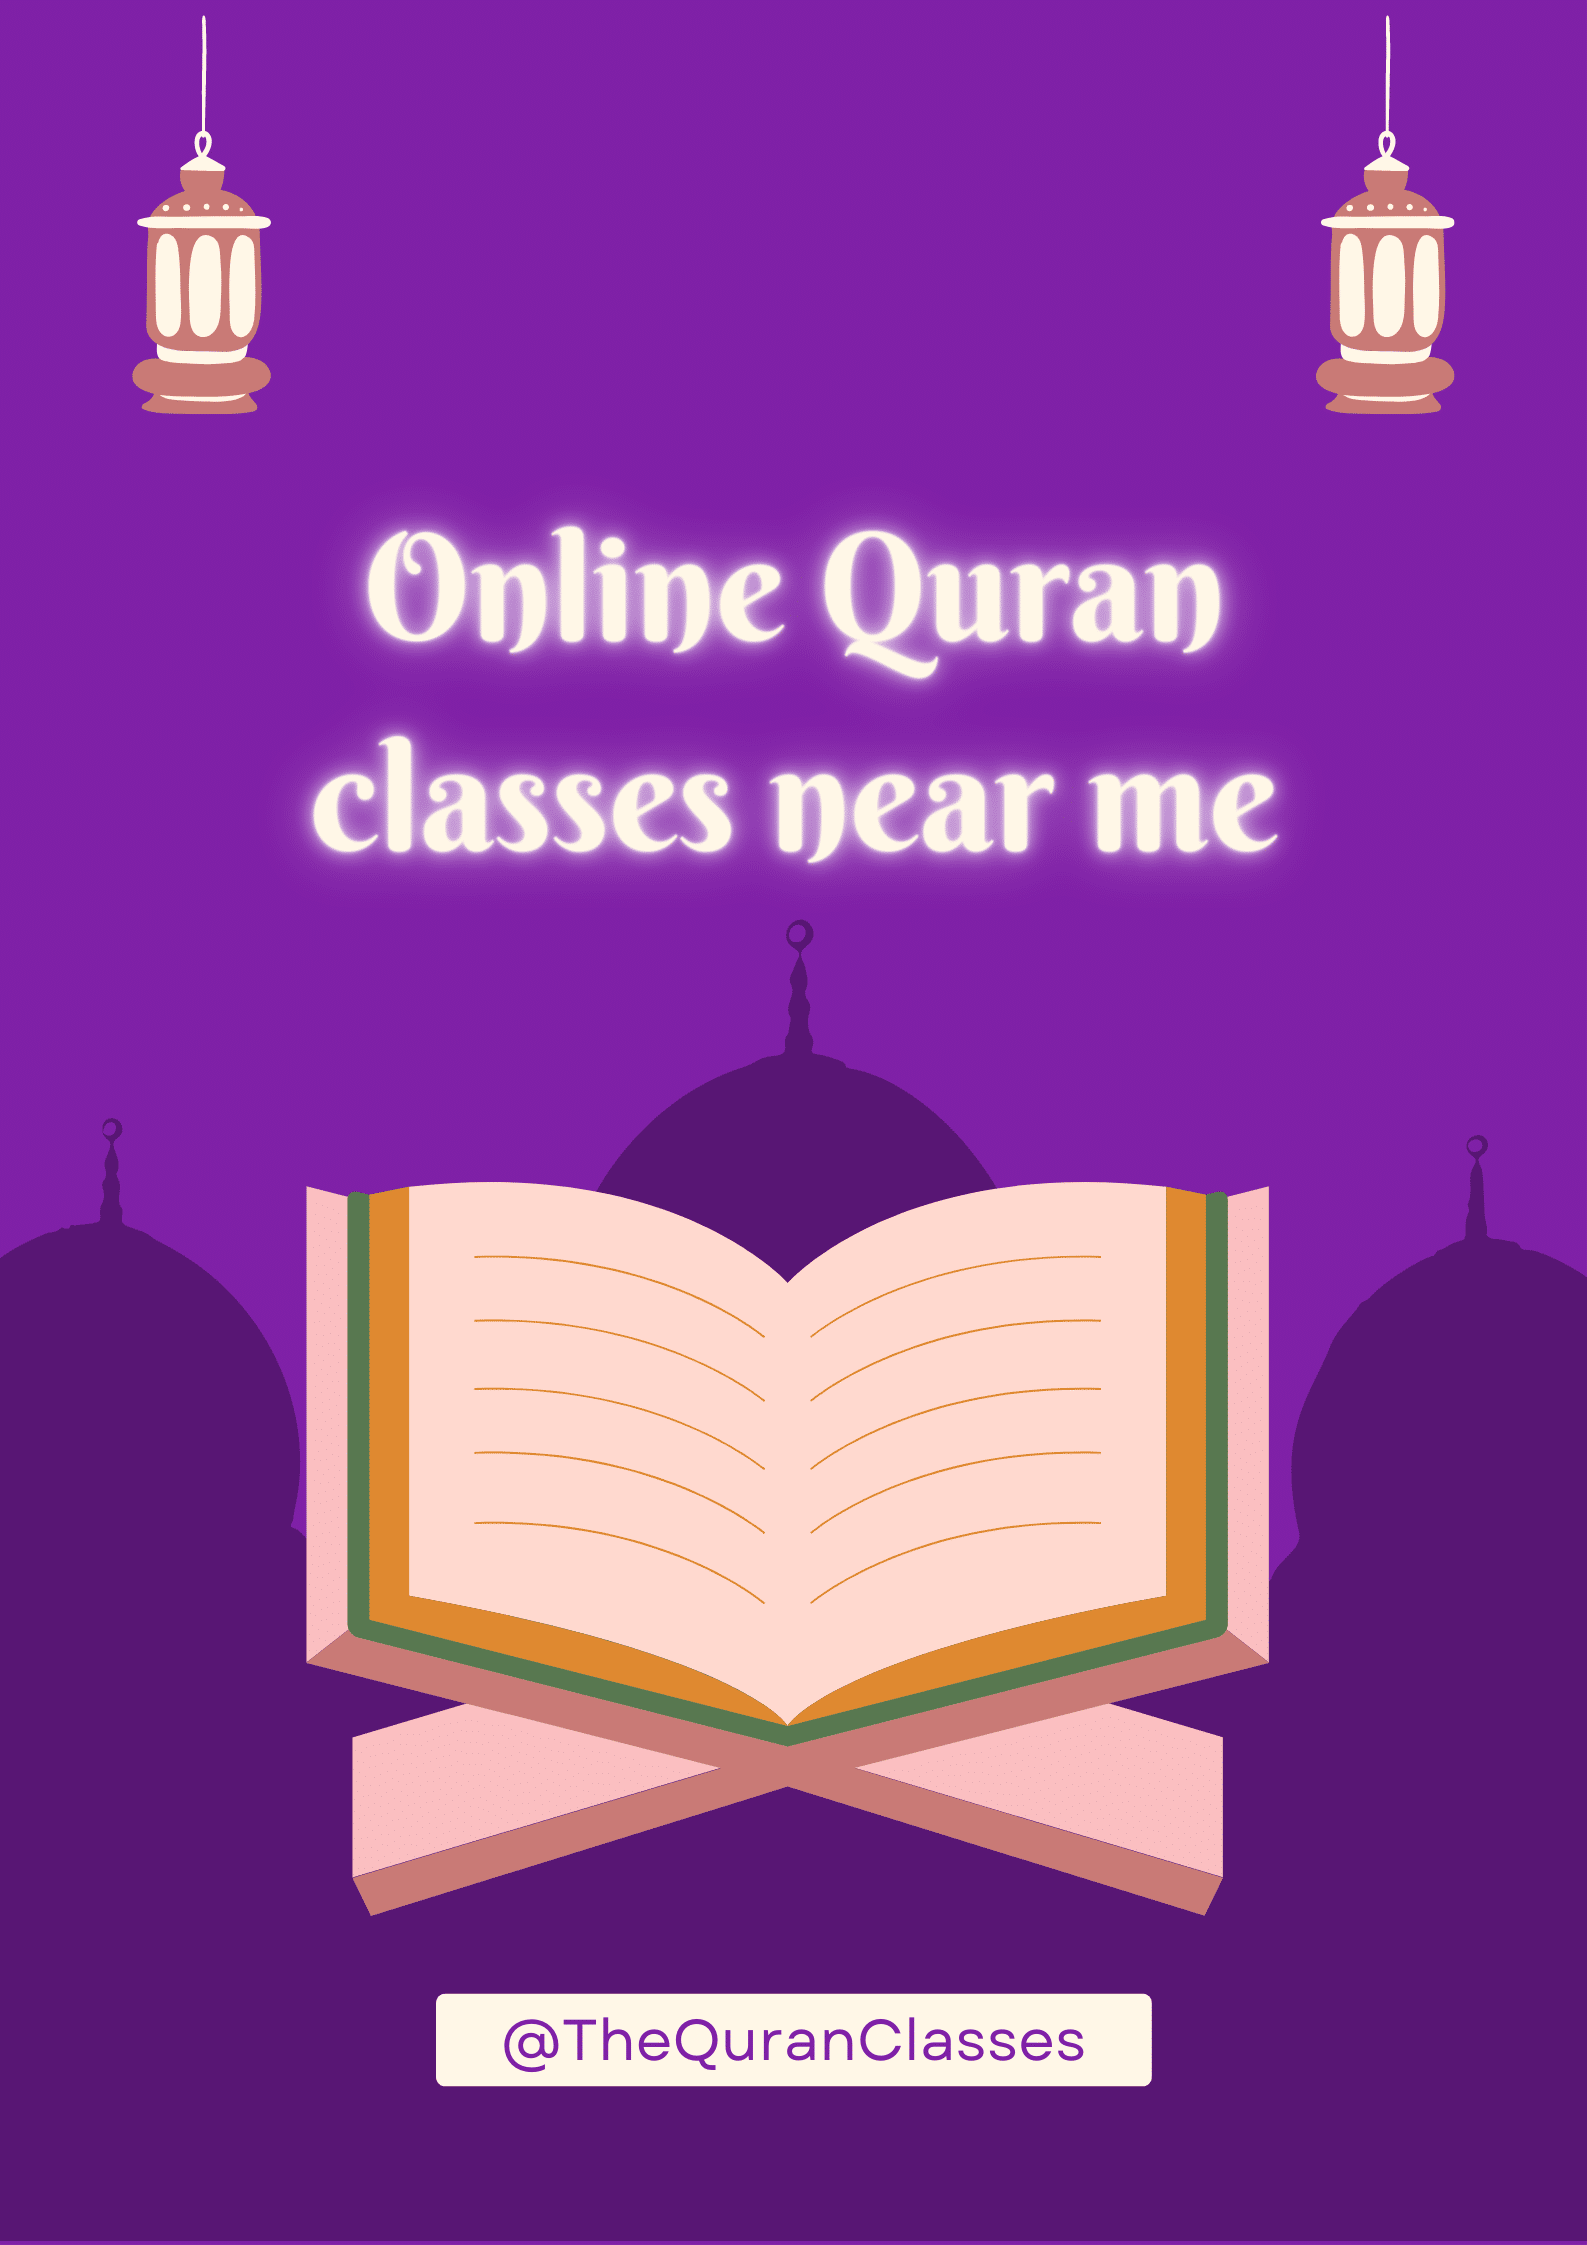 Online Quran classes near me